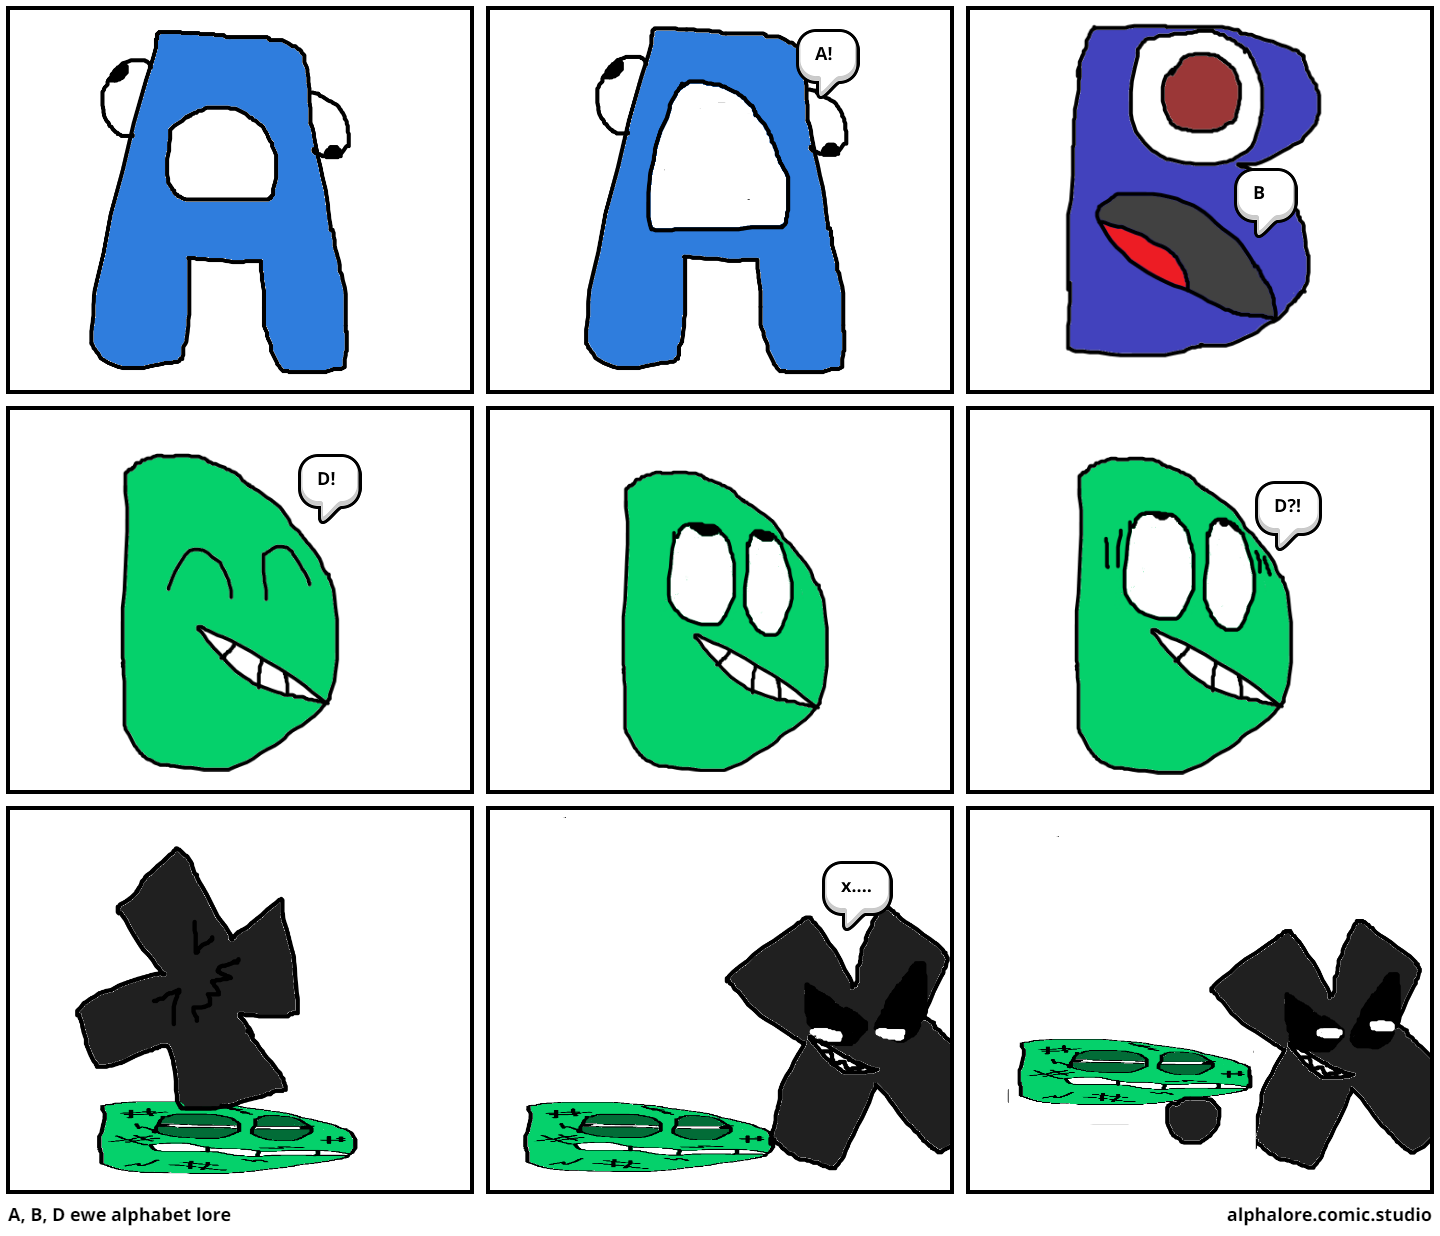 A, B, D ewe alphabet lore